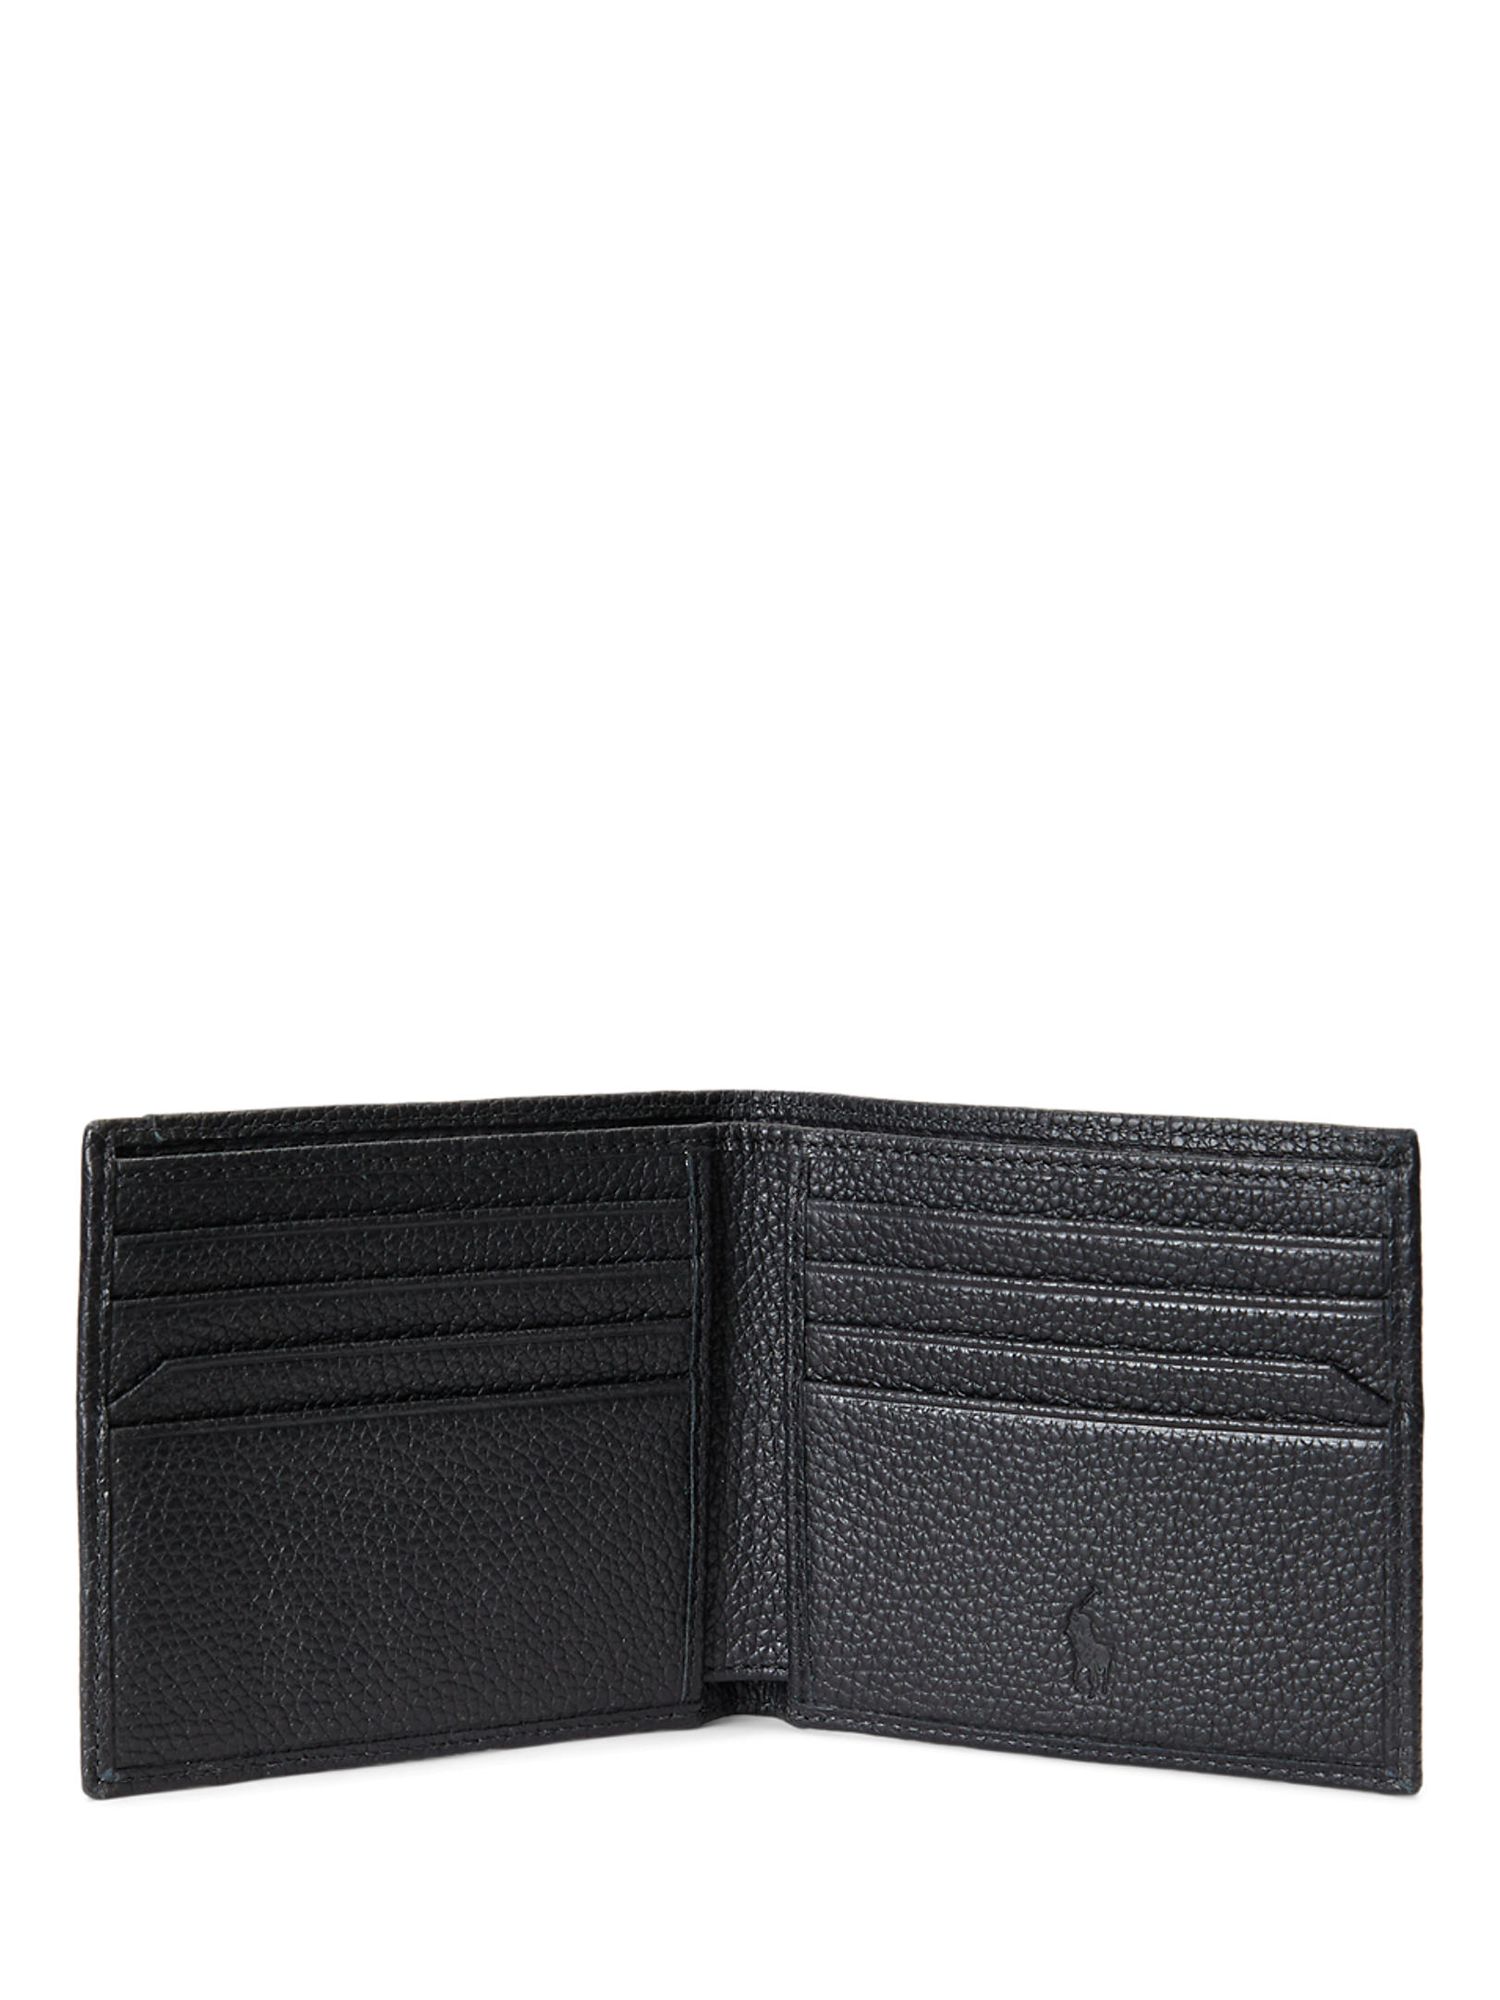 Polo Ralph Lauren Pebbled Leather Wallet, Black